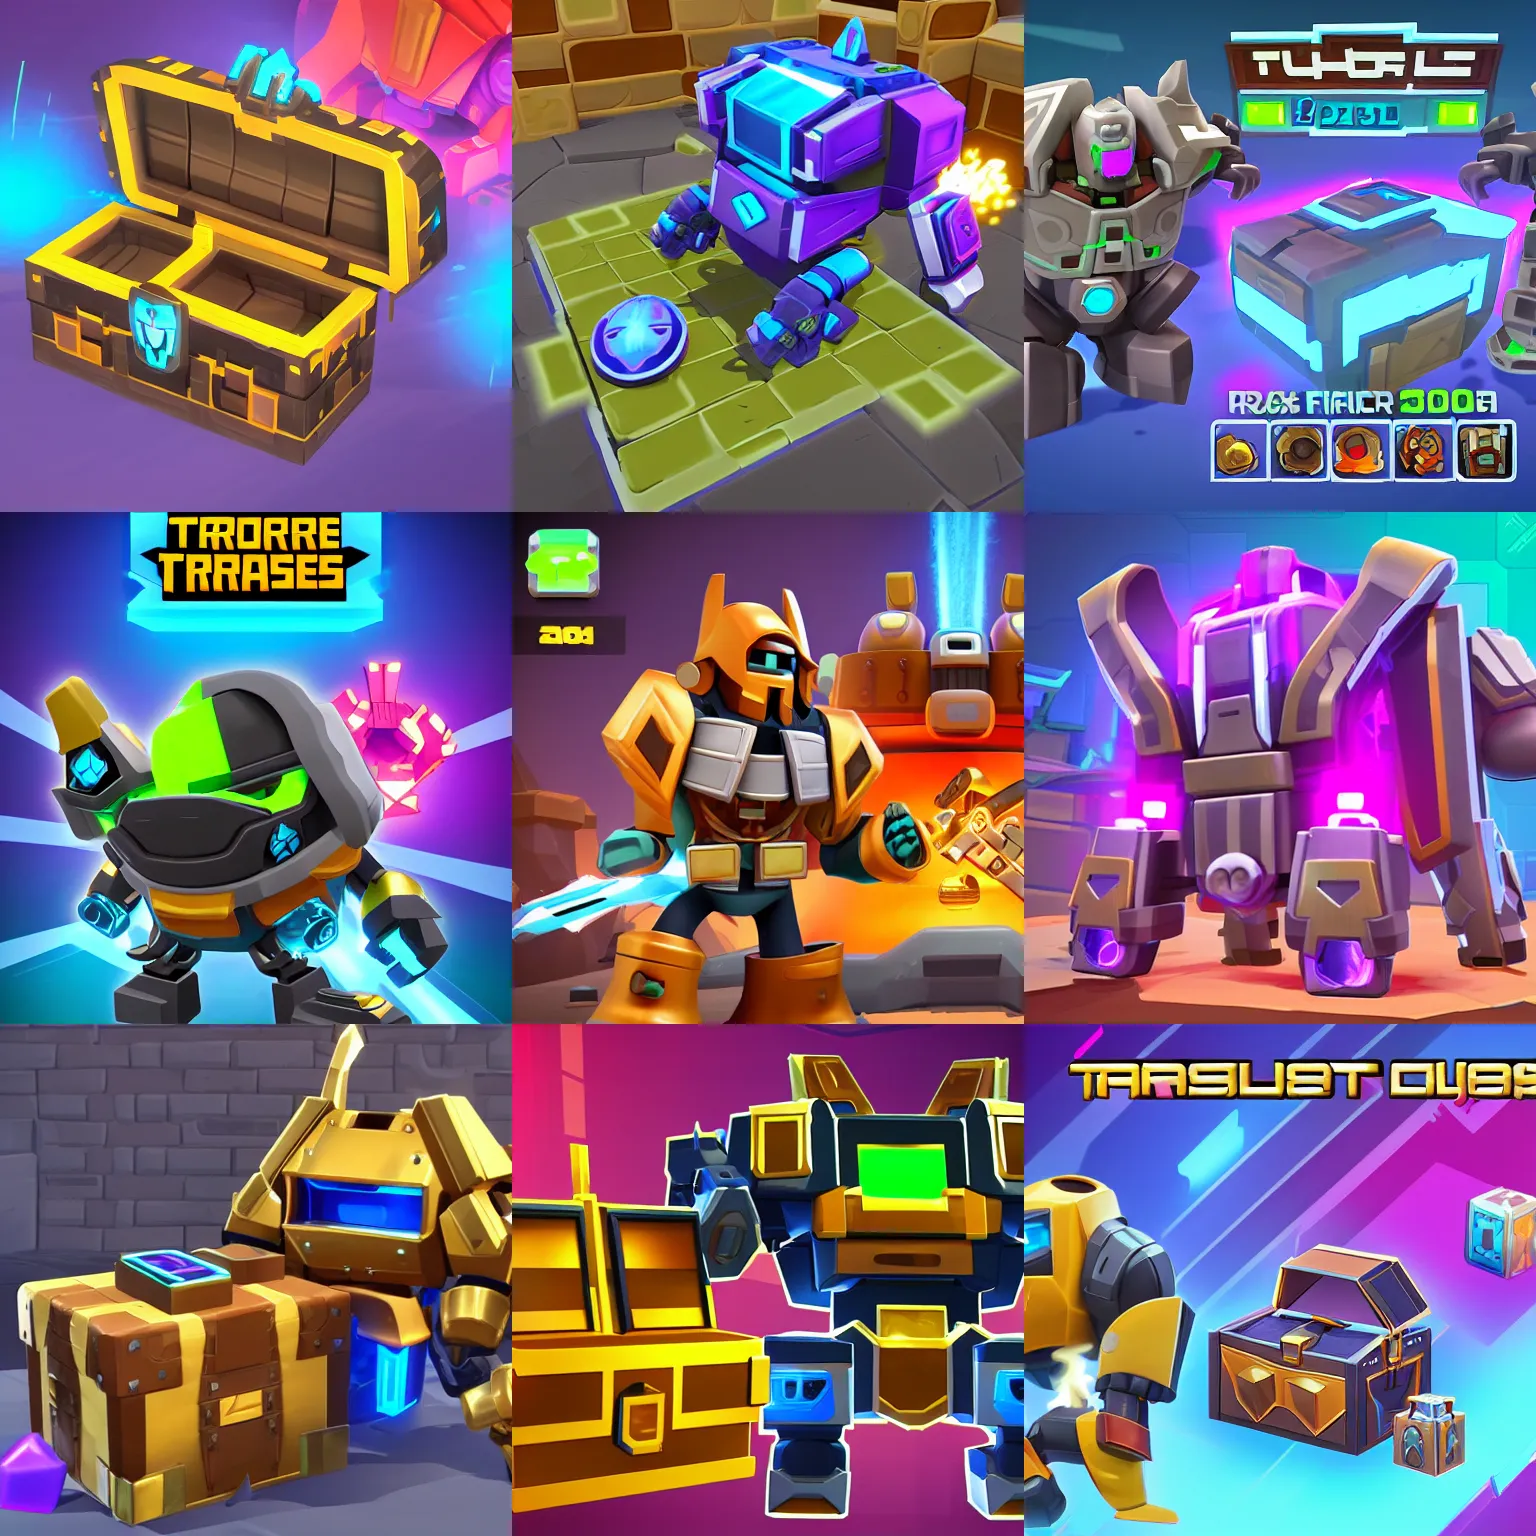 Prompt: futuristic transformer treasure chest, clash royal chest, brawl stars style, stylized, casual mobile game